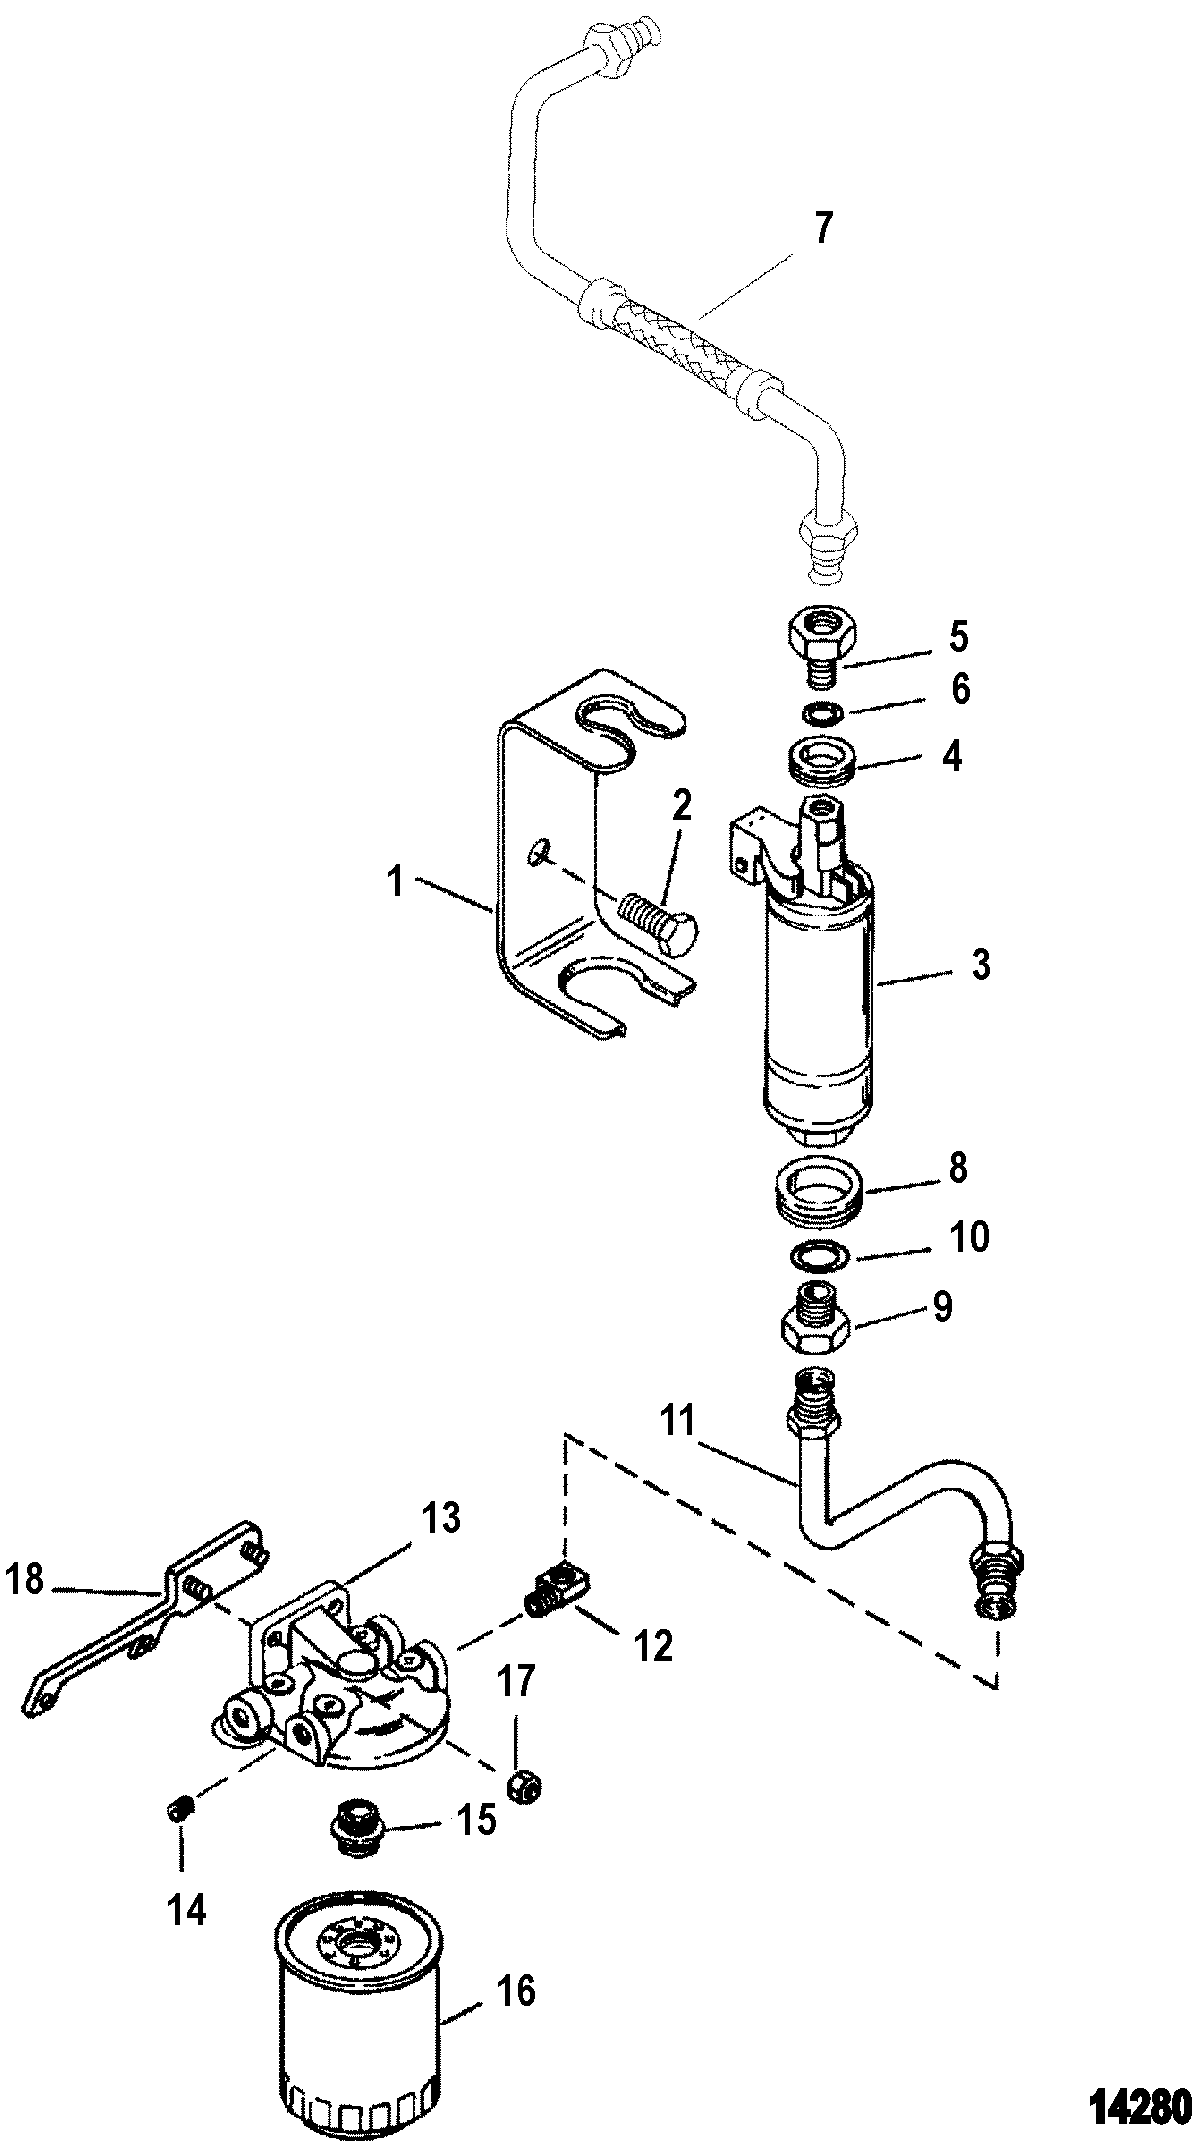 Fuel Pump And Fuel Filter(VST Fuel System)